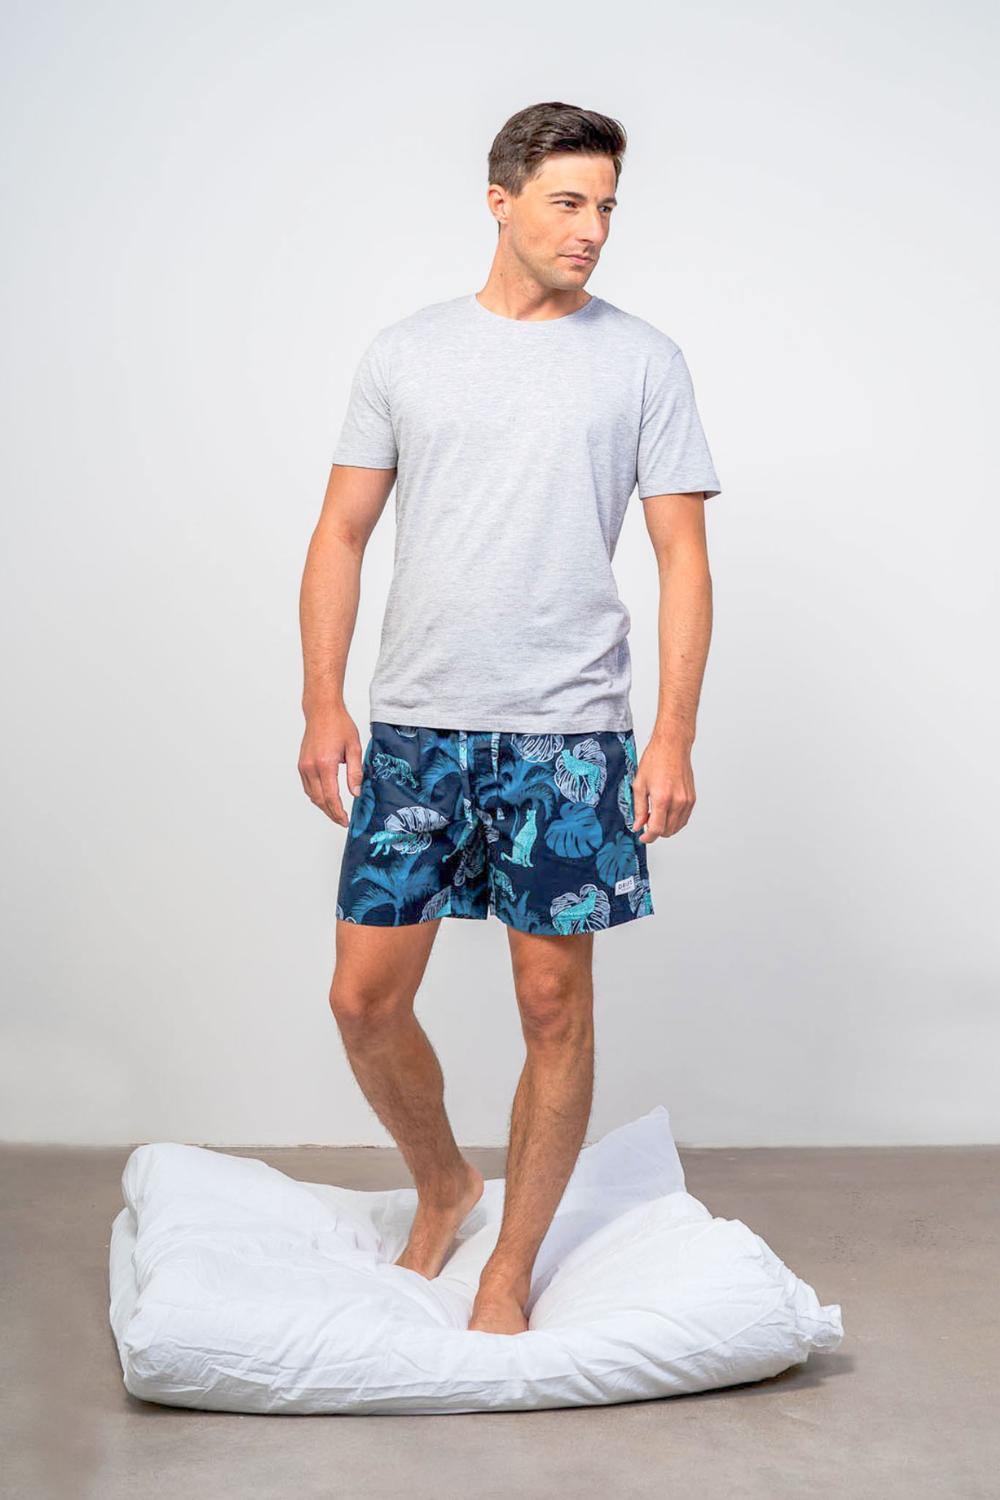 Model wearing luxury premium cotton sleepwear shorts set for men